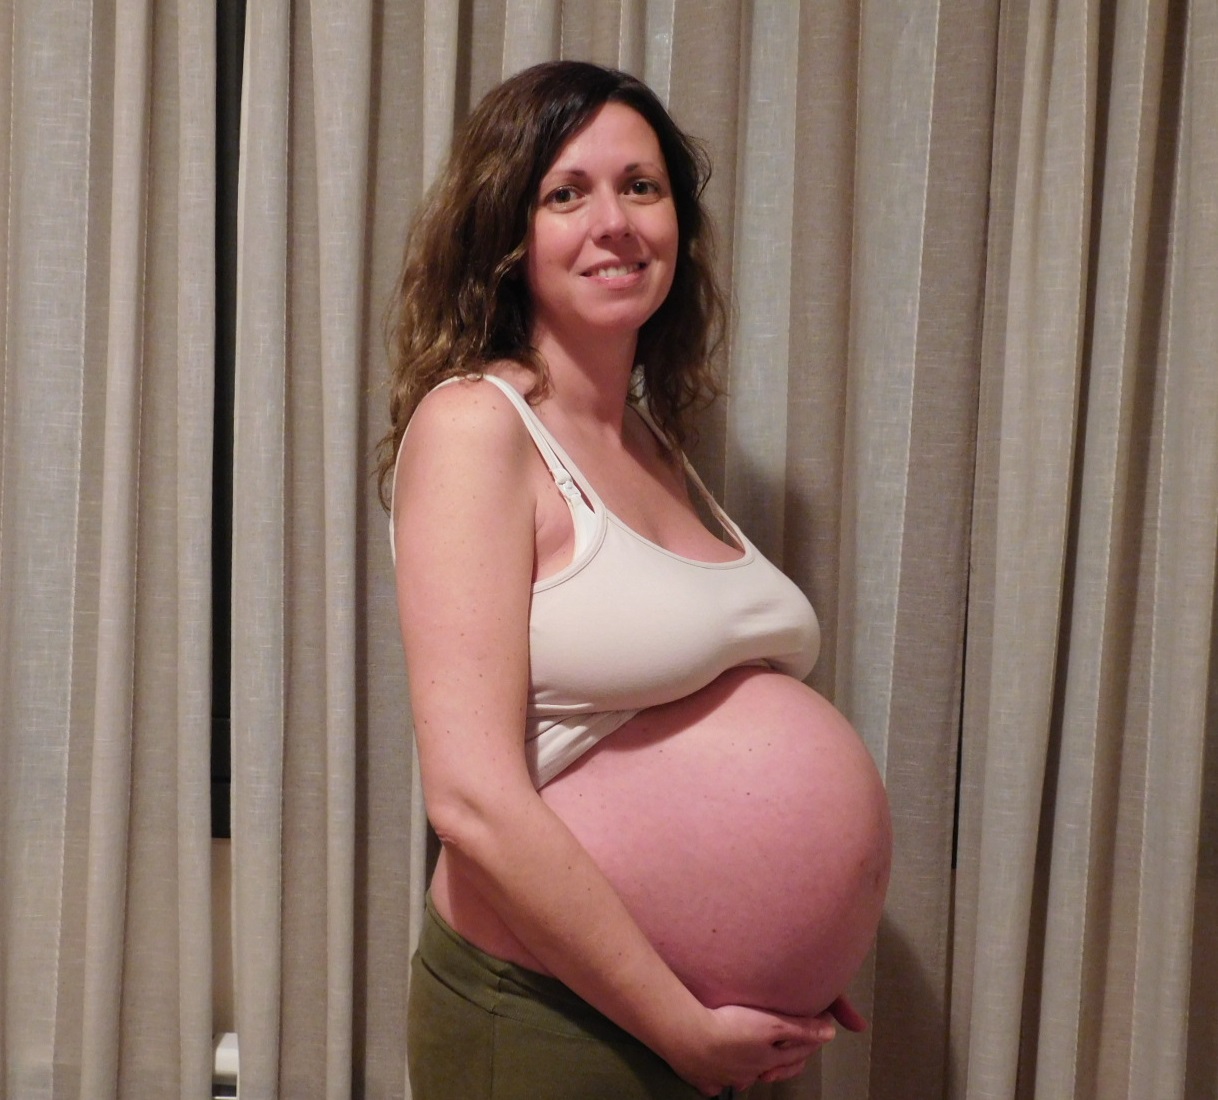 El porqué decidí ser Asesora de Fertilidad e Infertilidad